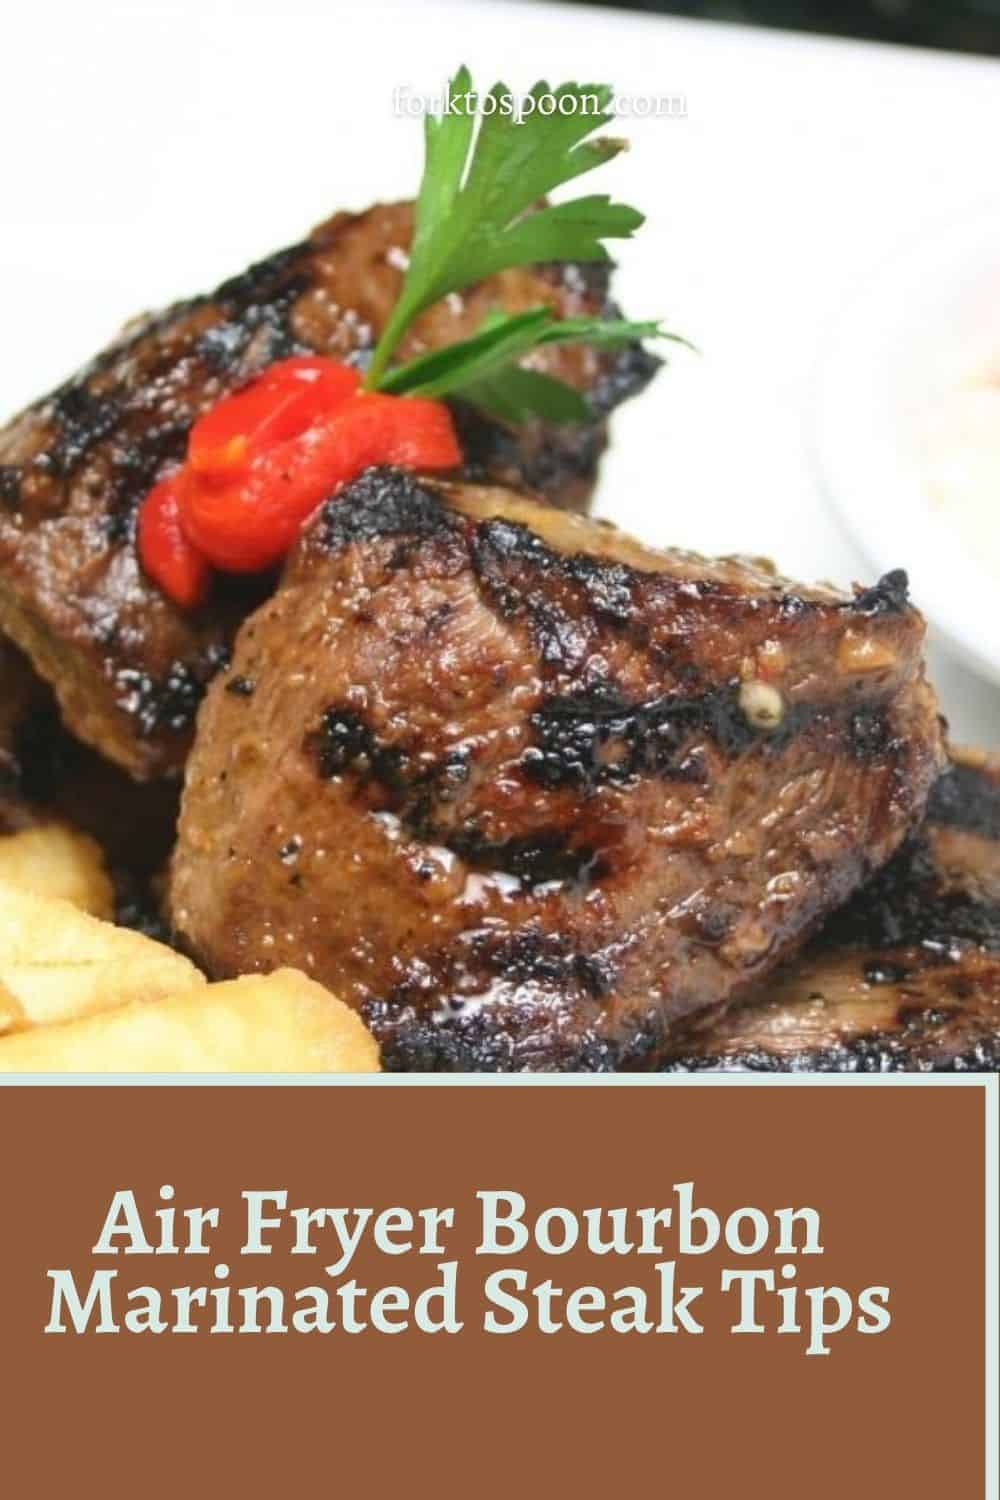 Air Fryer Bourbon Marinated Steak Tips